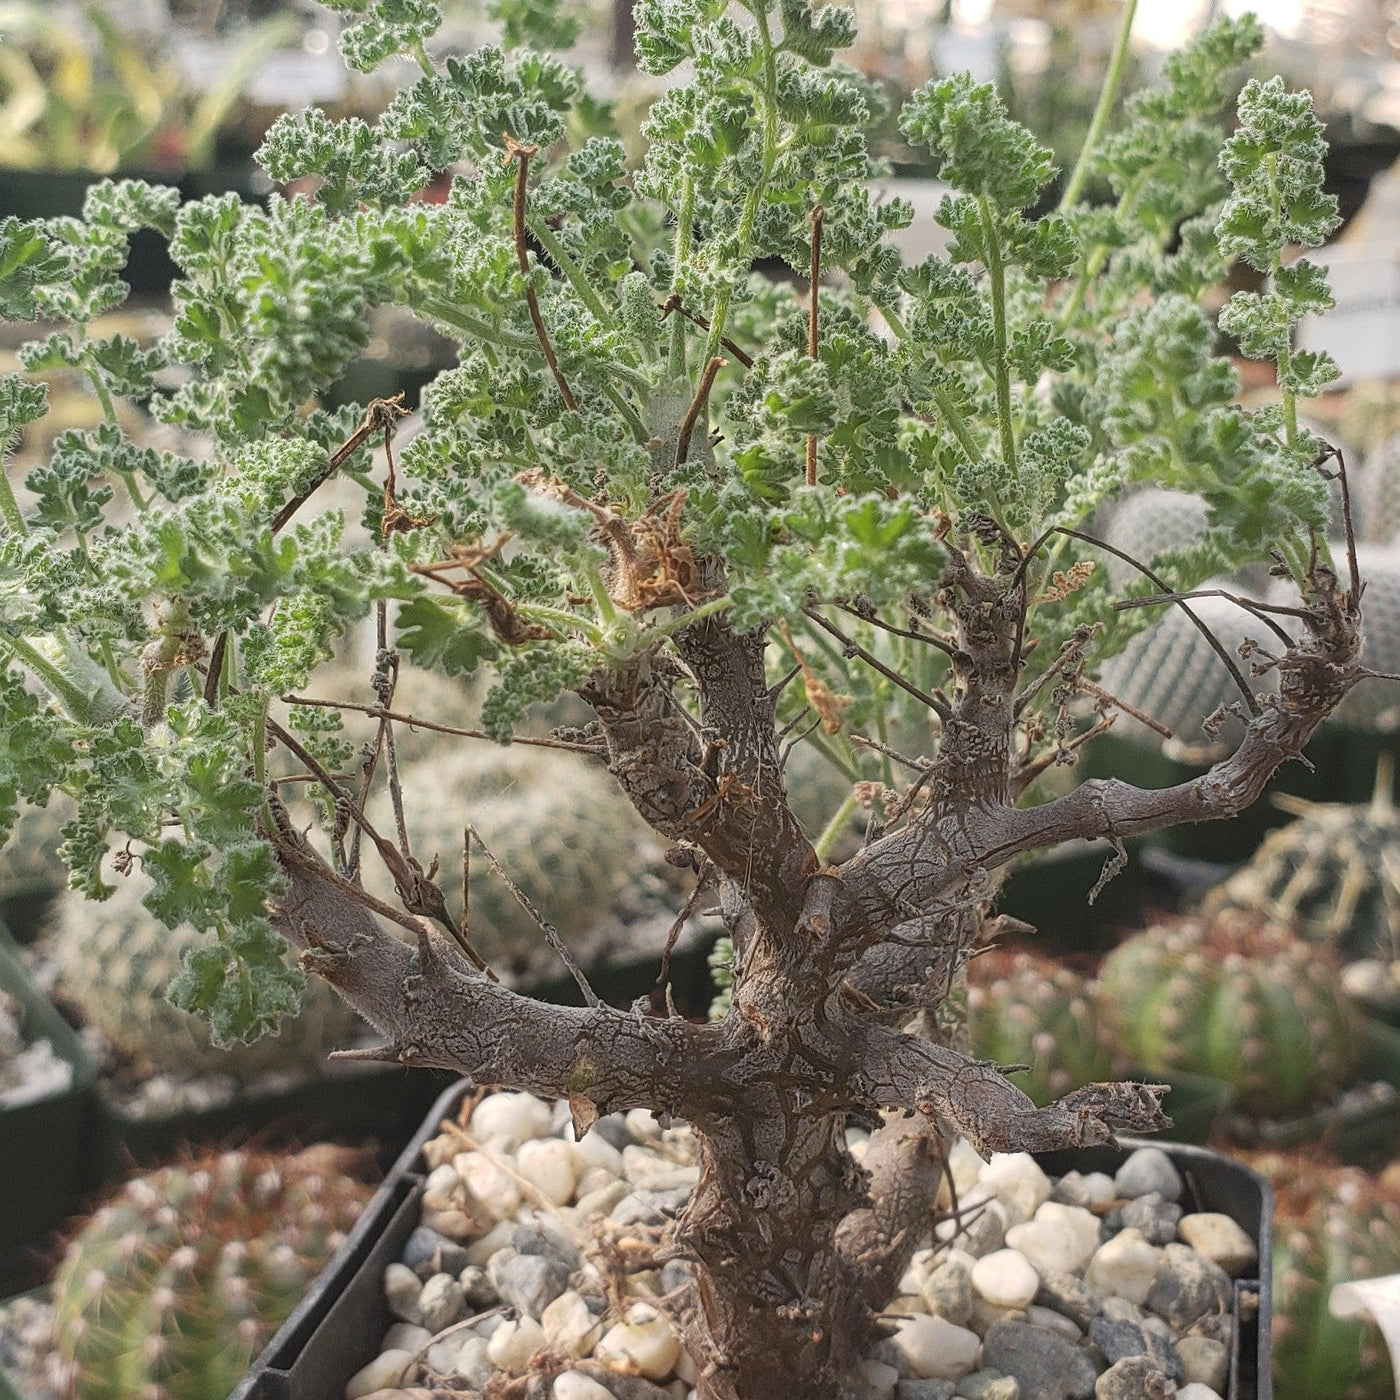 Pelargonium alternans